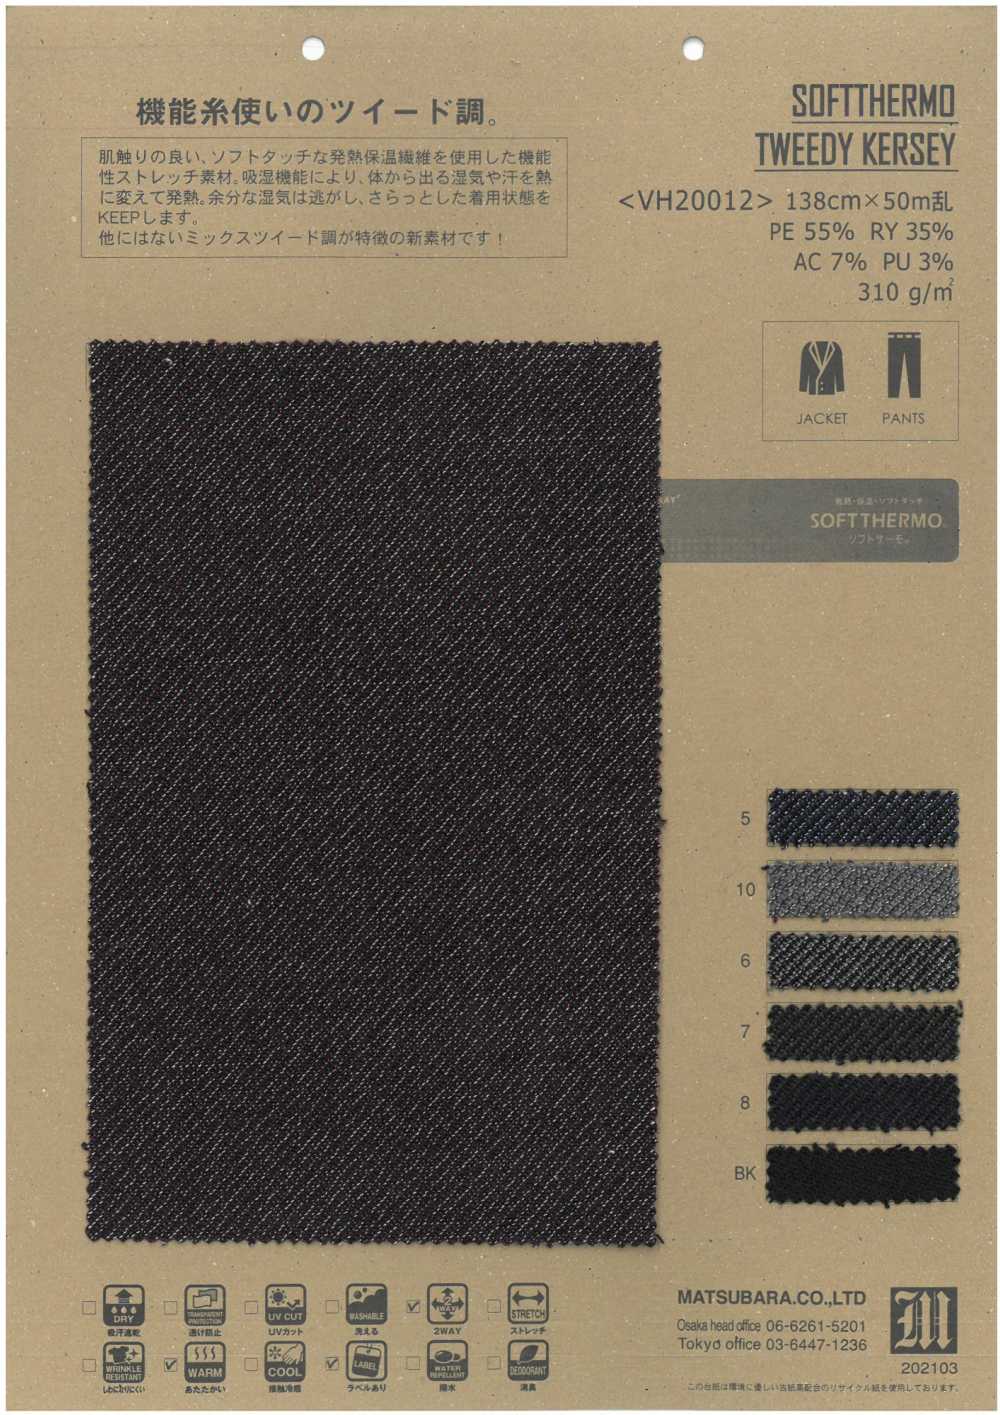 VH20012 SOFTHERMO TWEEDY KERSEY[Textile / Fabric] Matsubara